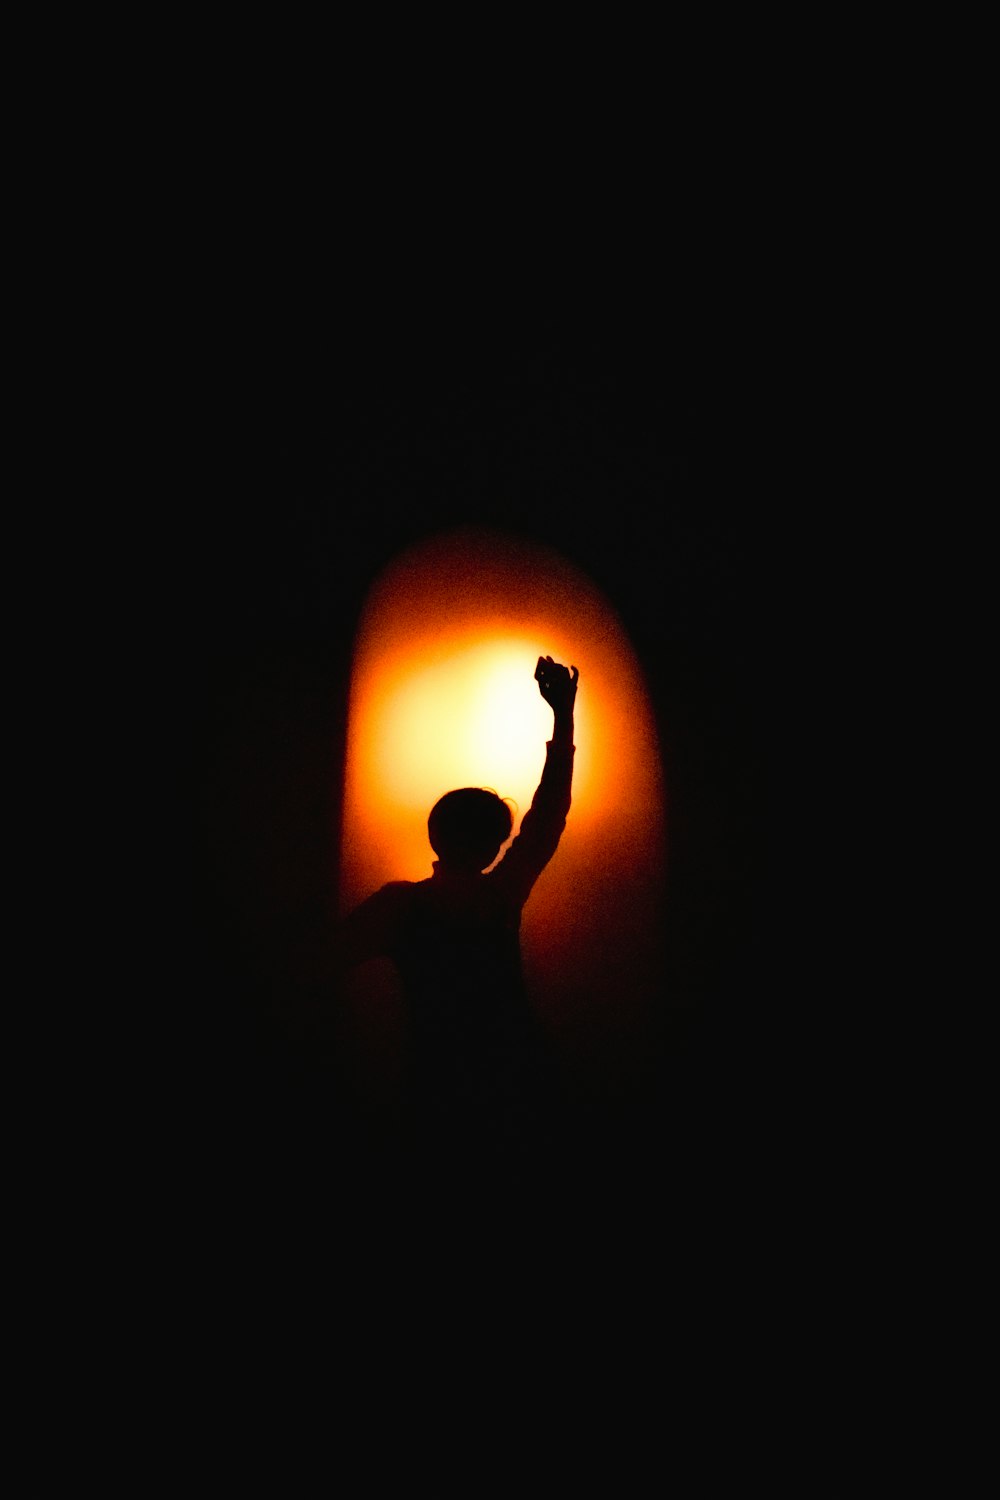 a silhouette of a person raising their arm in the dark